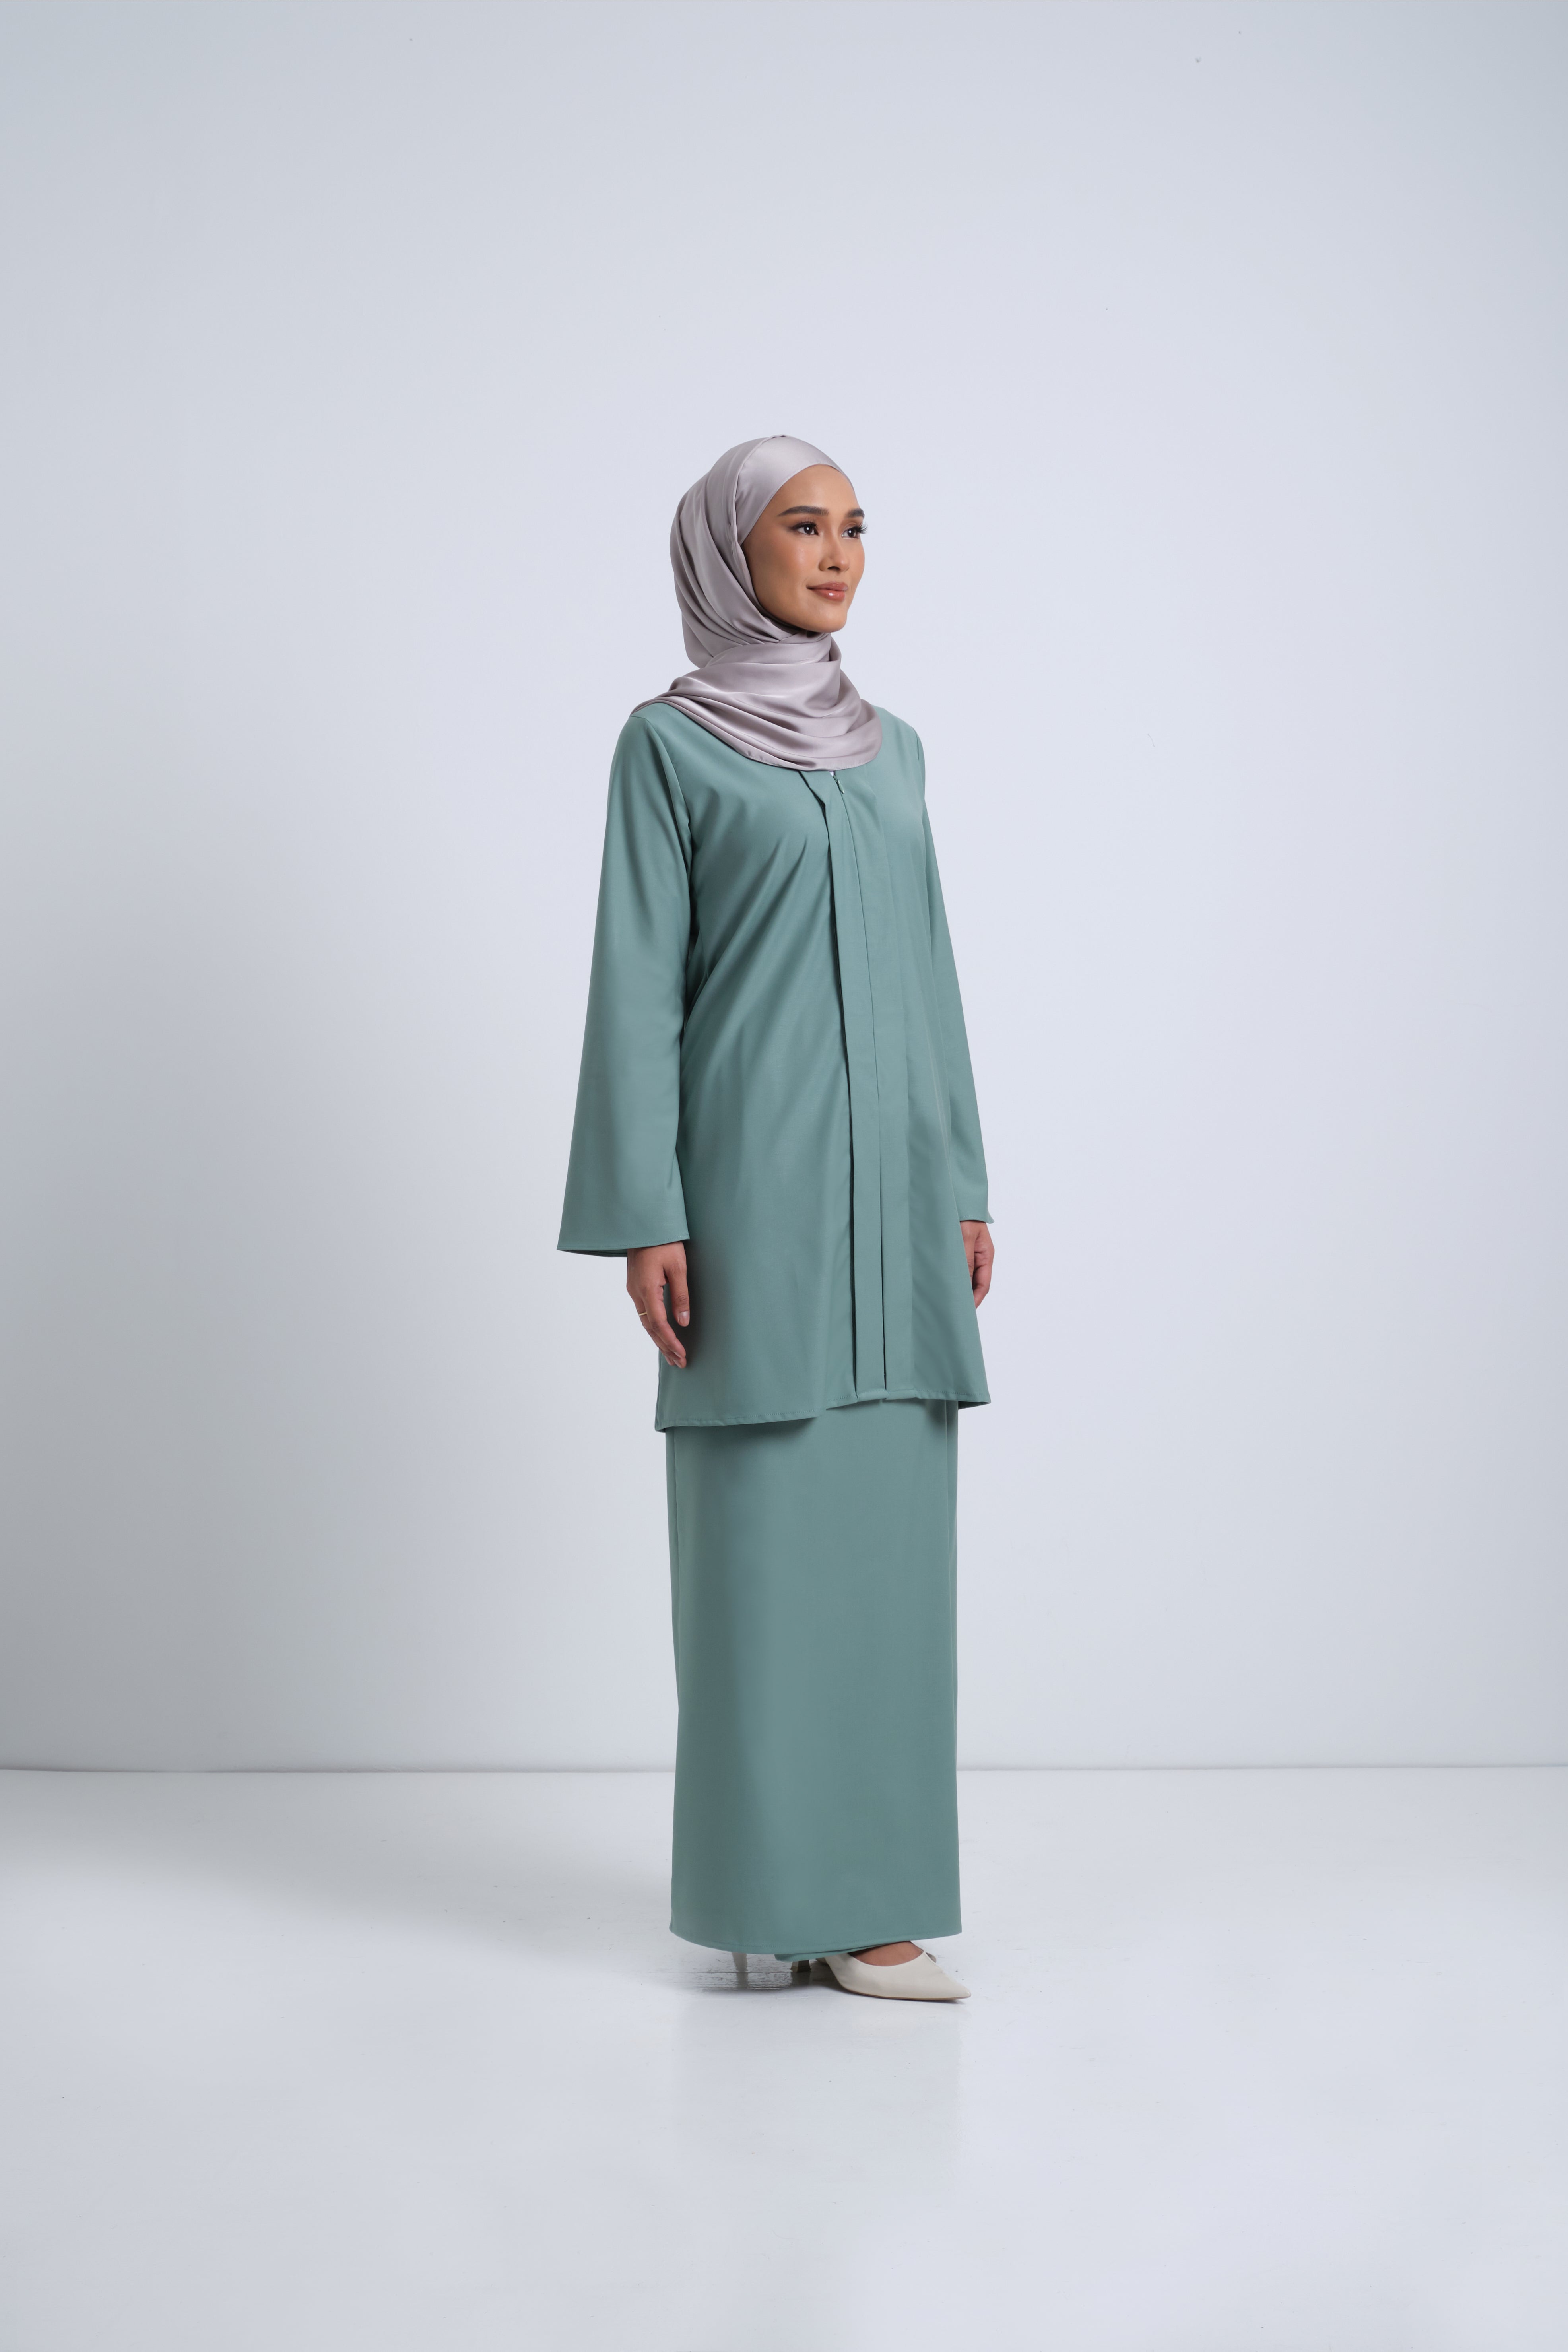 Patawali Baju Kebaya - Soft Teal Green